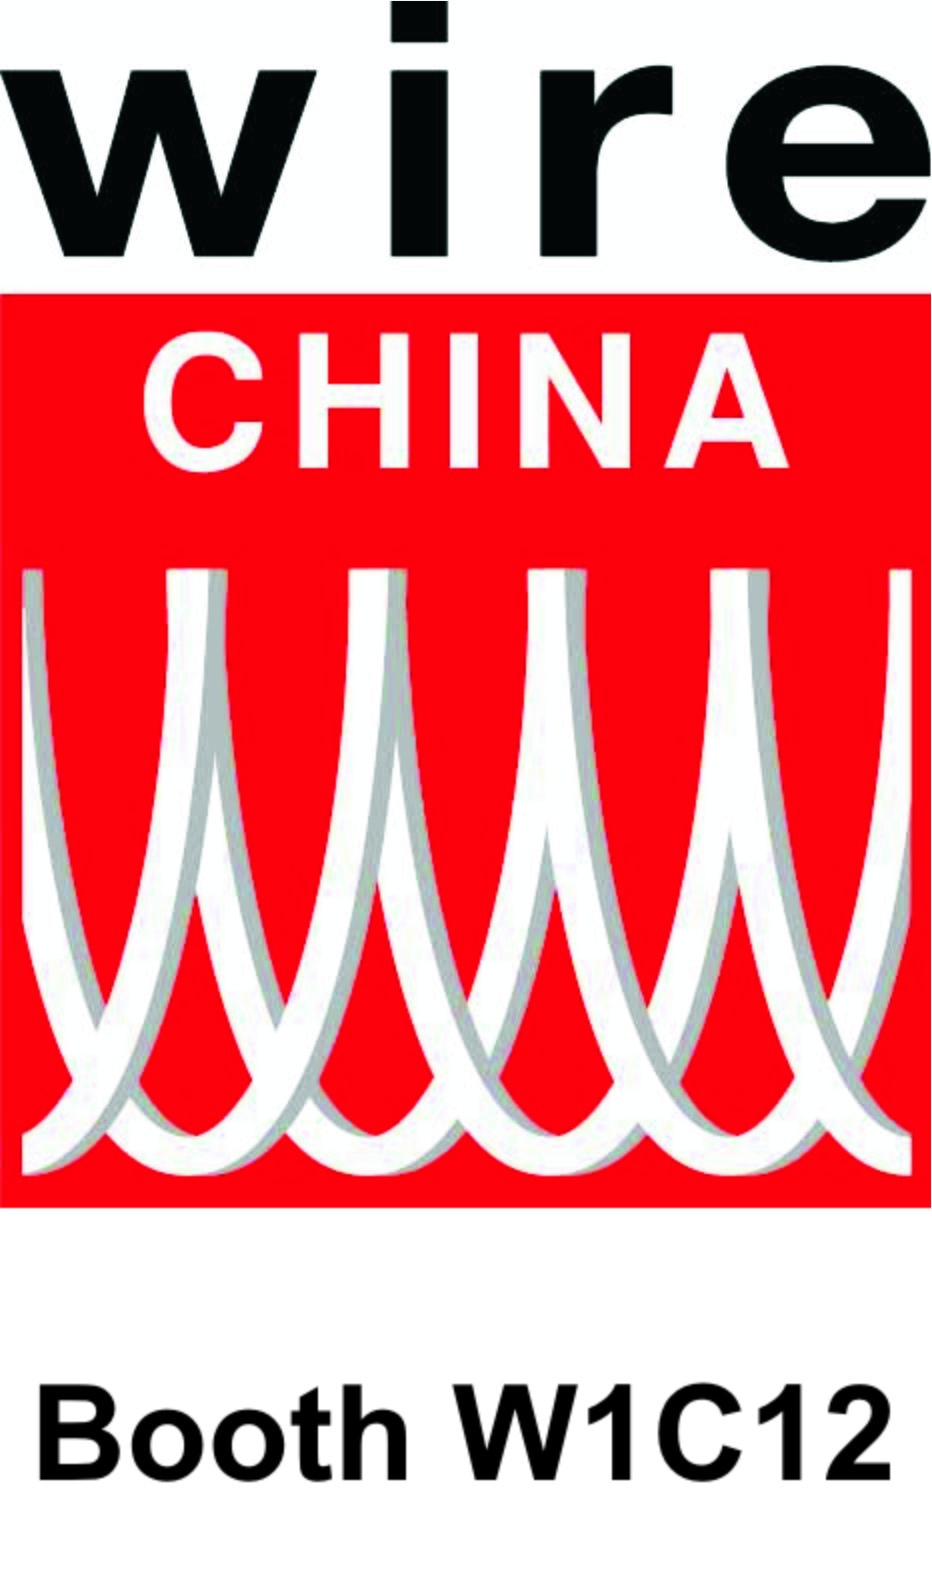 wire China 2020